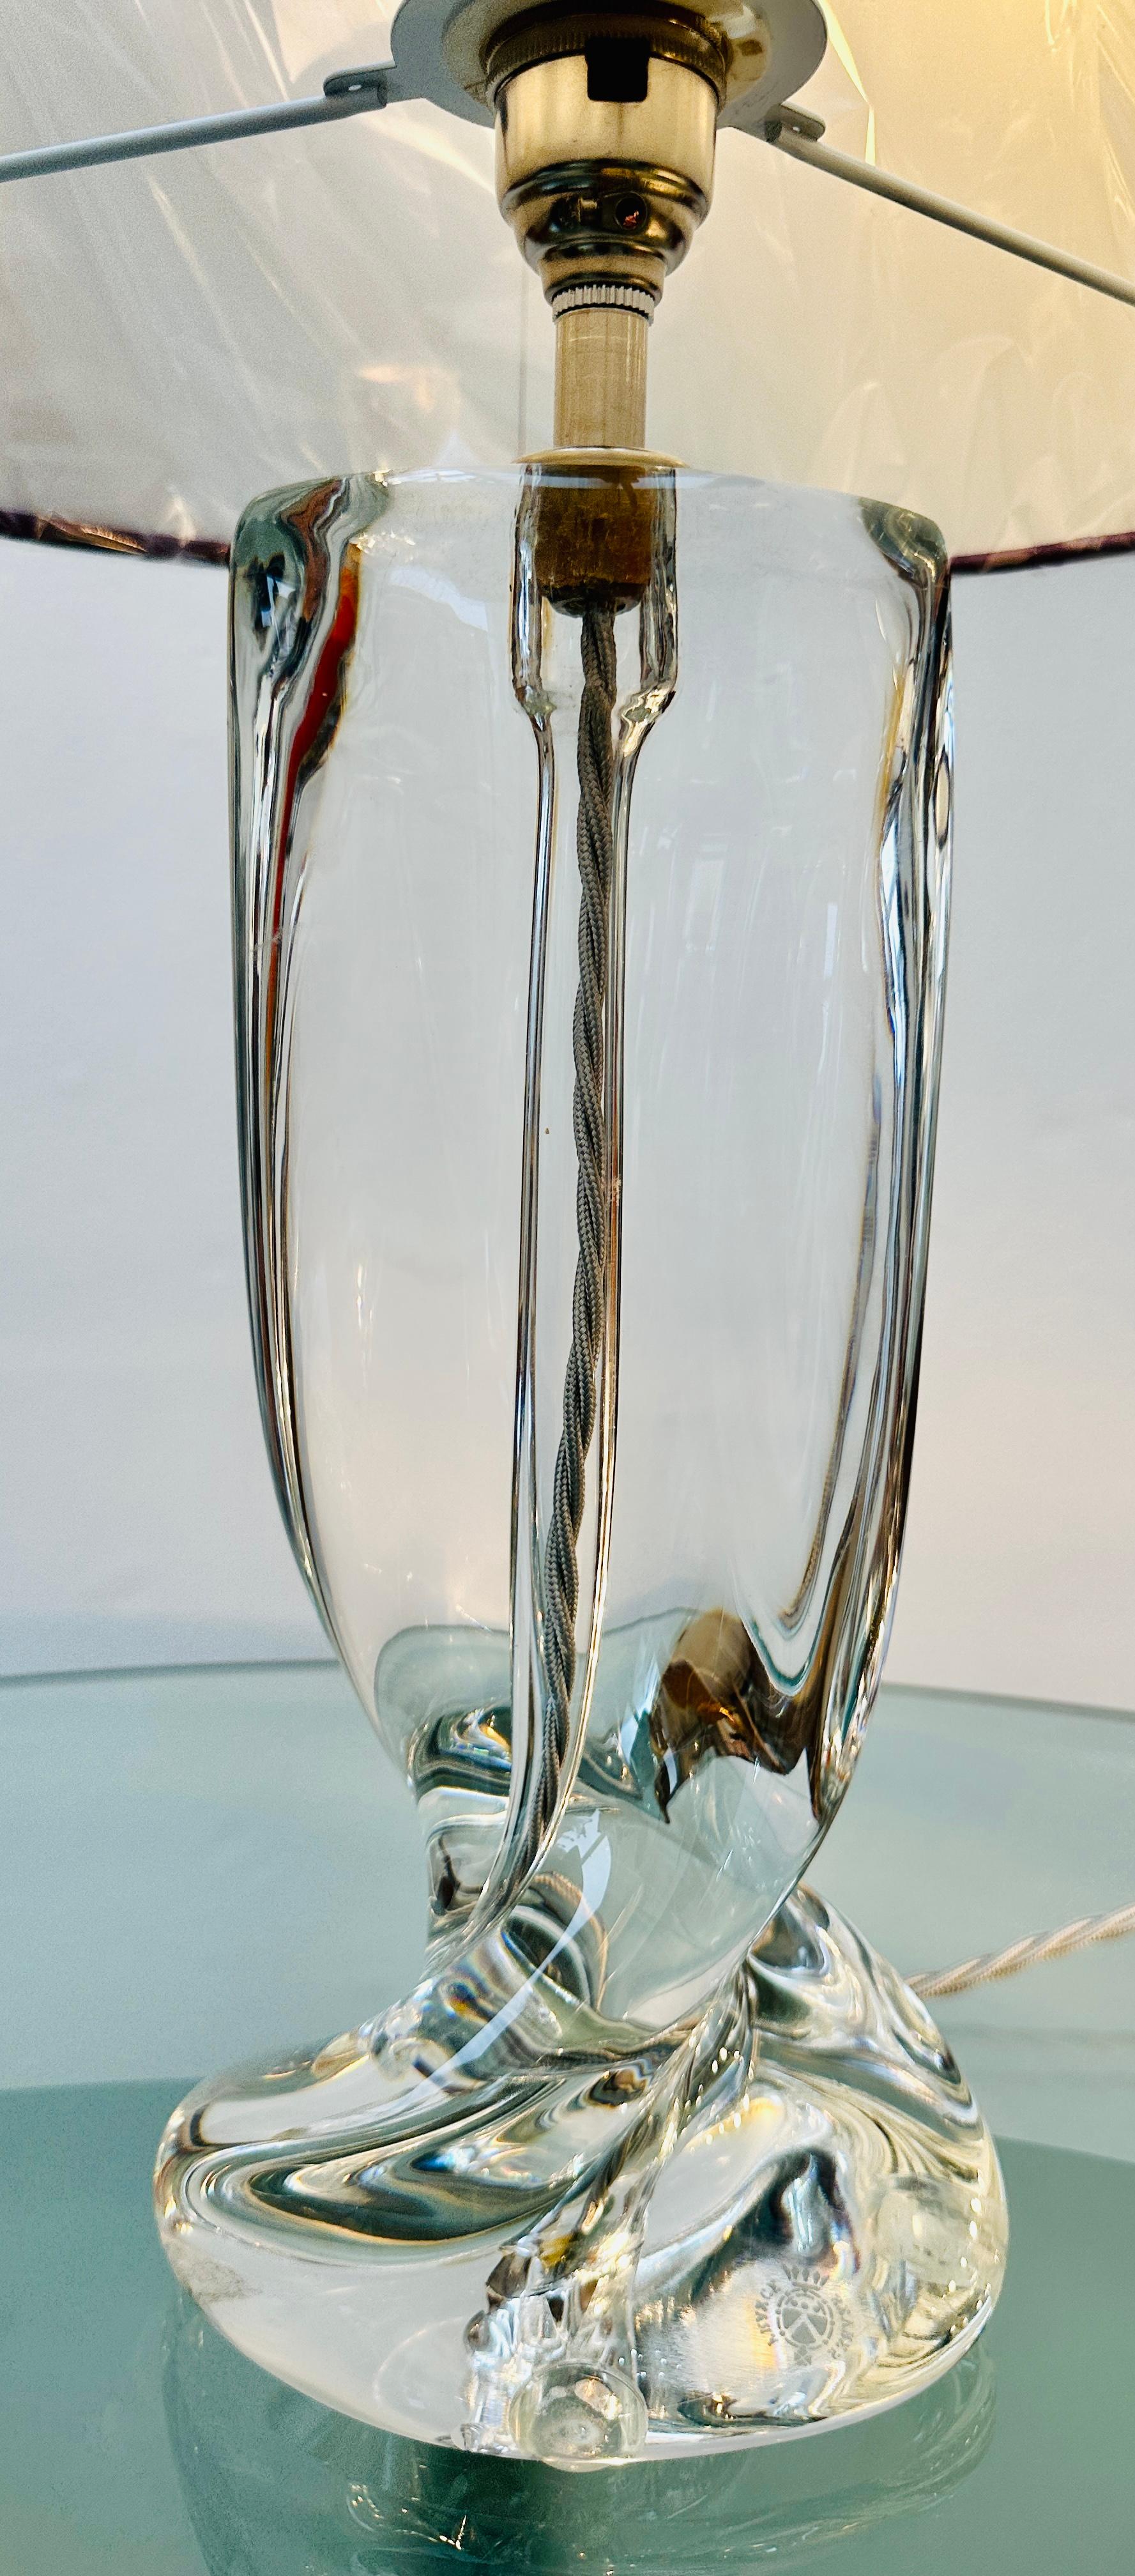 1950s Modernist French Cristalleries De Sèvre Crystal Glass & Chrome Table Lamp For Sale 5